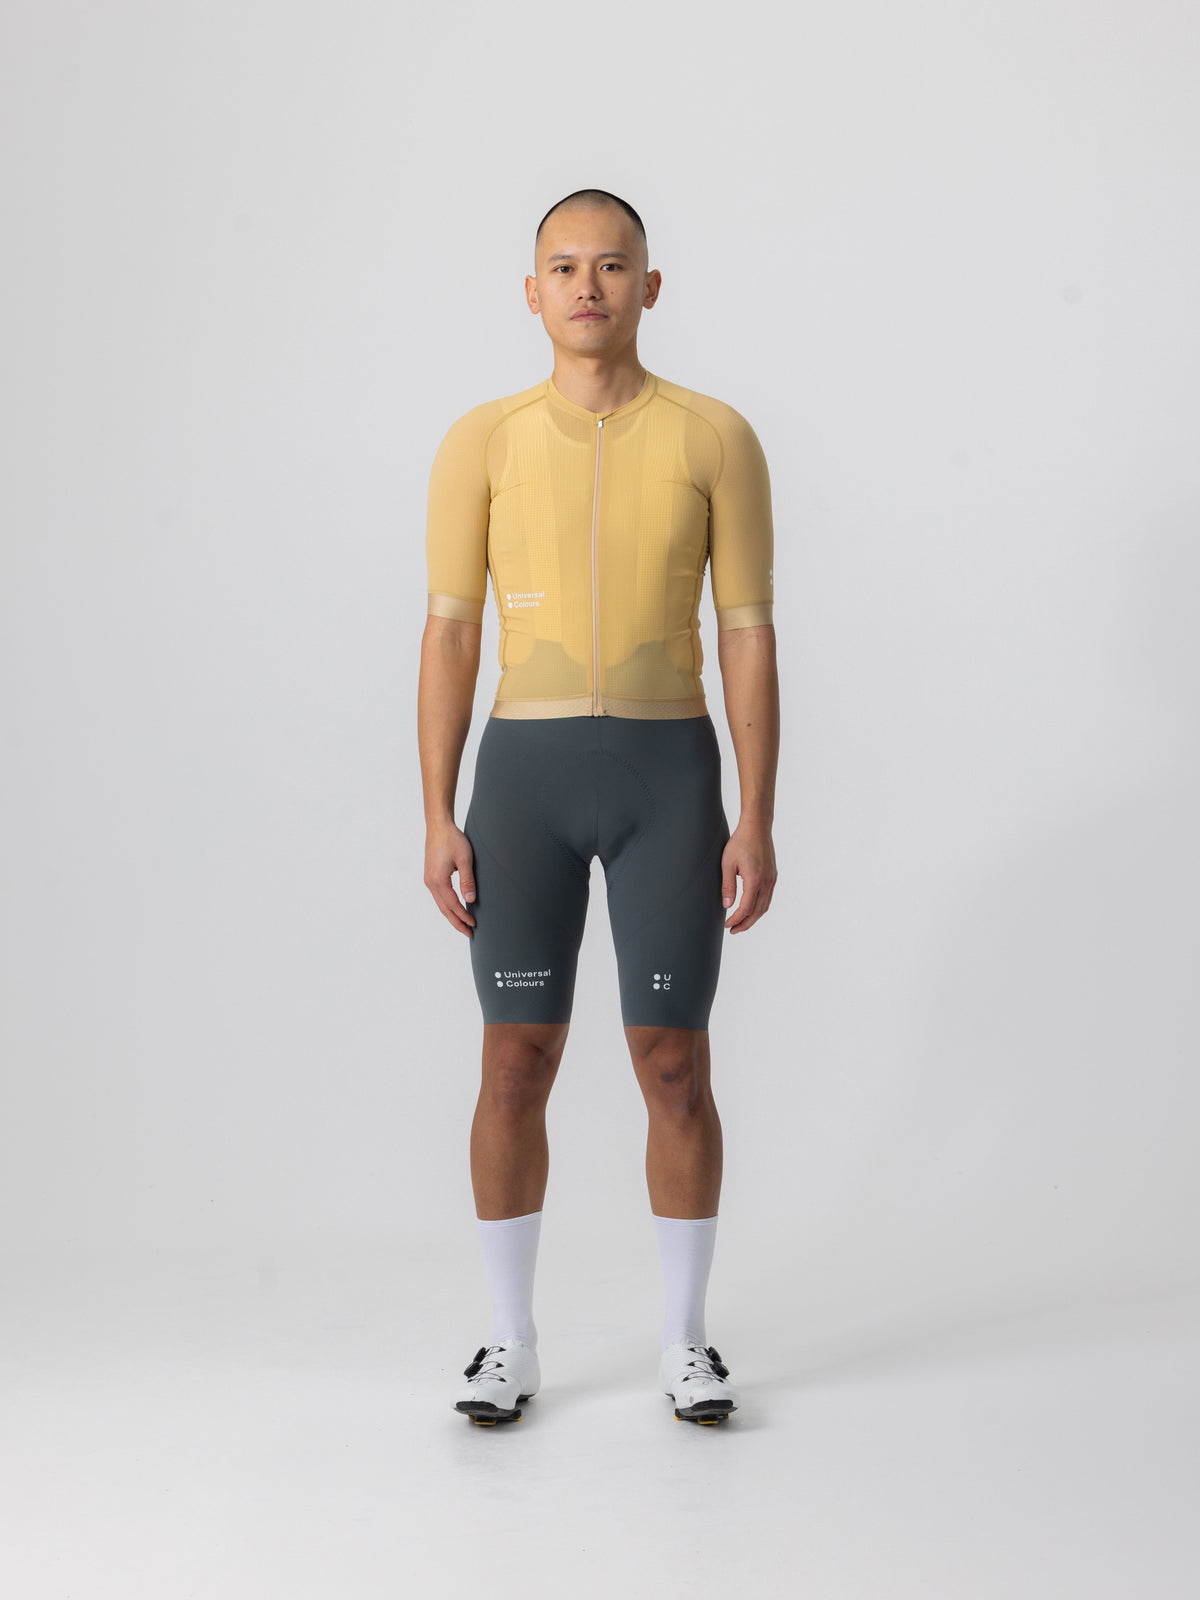 Universal Colours Chroma サイクリングジャージ サンドブラウン | 超軽量フランス織りナイロンでパフォーマンス向上